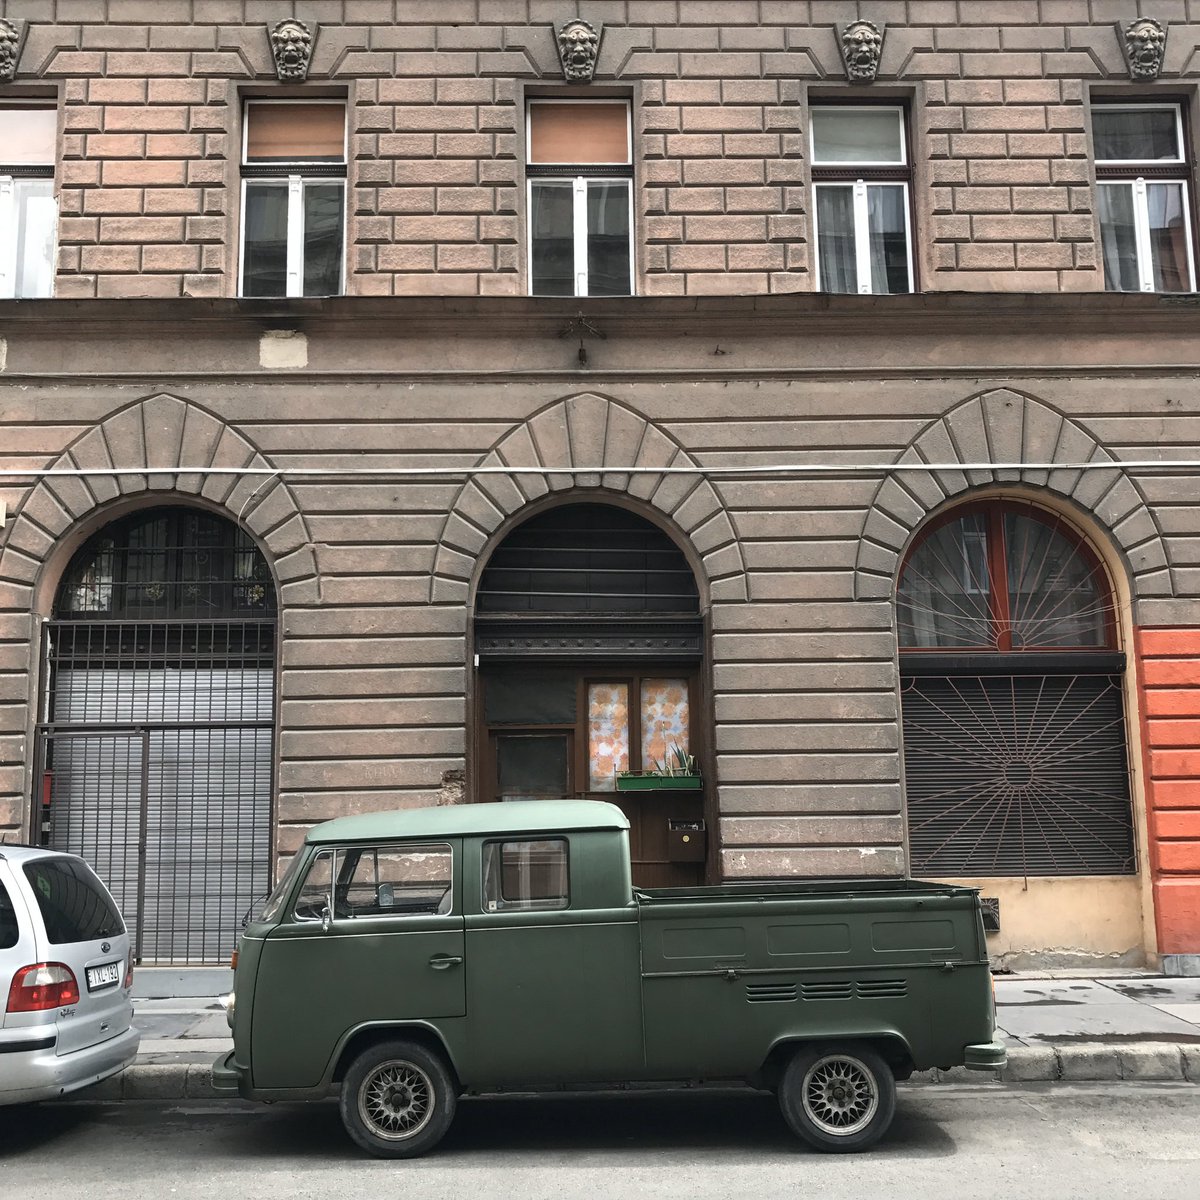 Army green Volkswagen Transporter Type 2 Doublecab Pick up (T2, 1979) spotted in Budapest.
#vwt2 #vwpickup 
@YesterdaysDrive @Rockstarscars @SAID_elMEHDI_ @addict_car @UnaPatata213 @GeorgeCochrane1